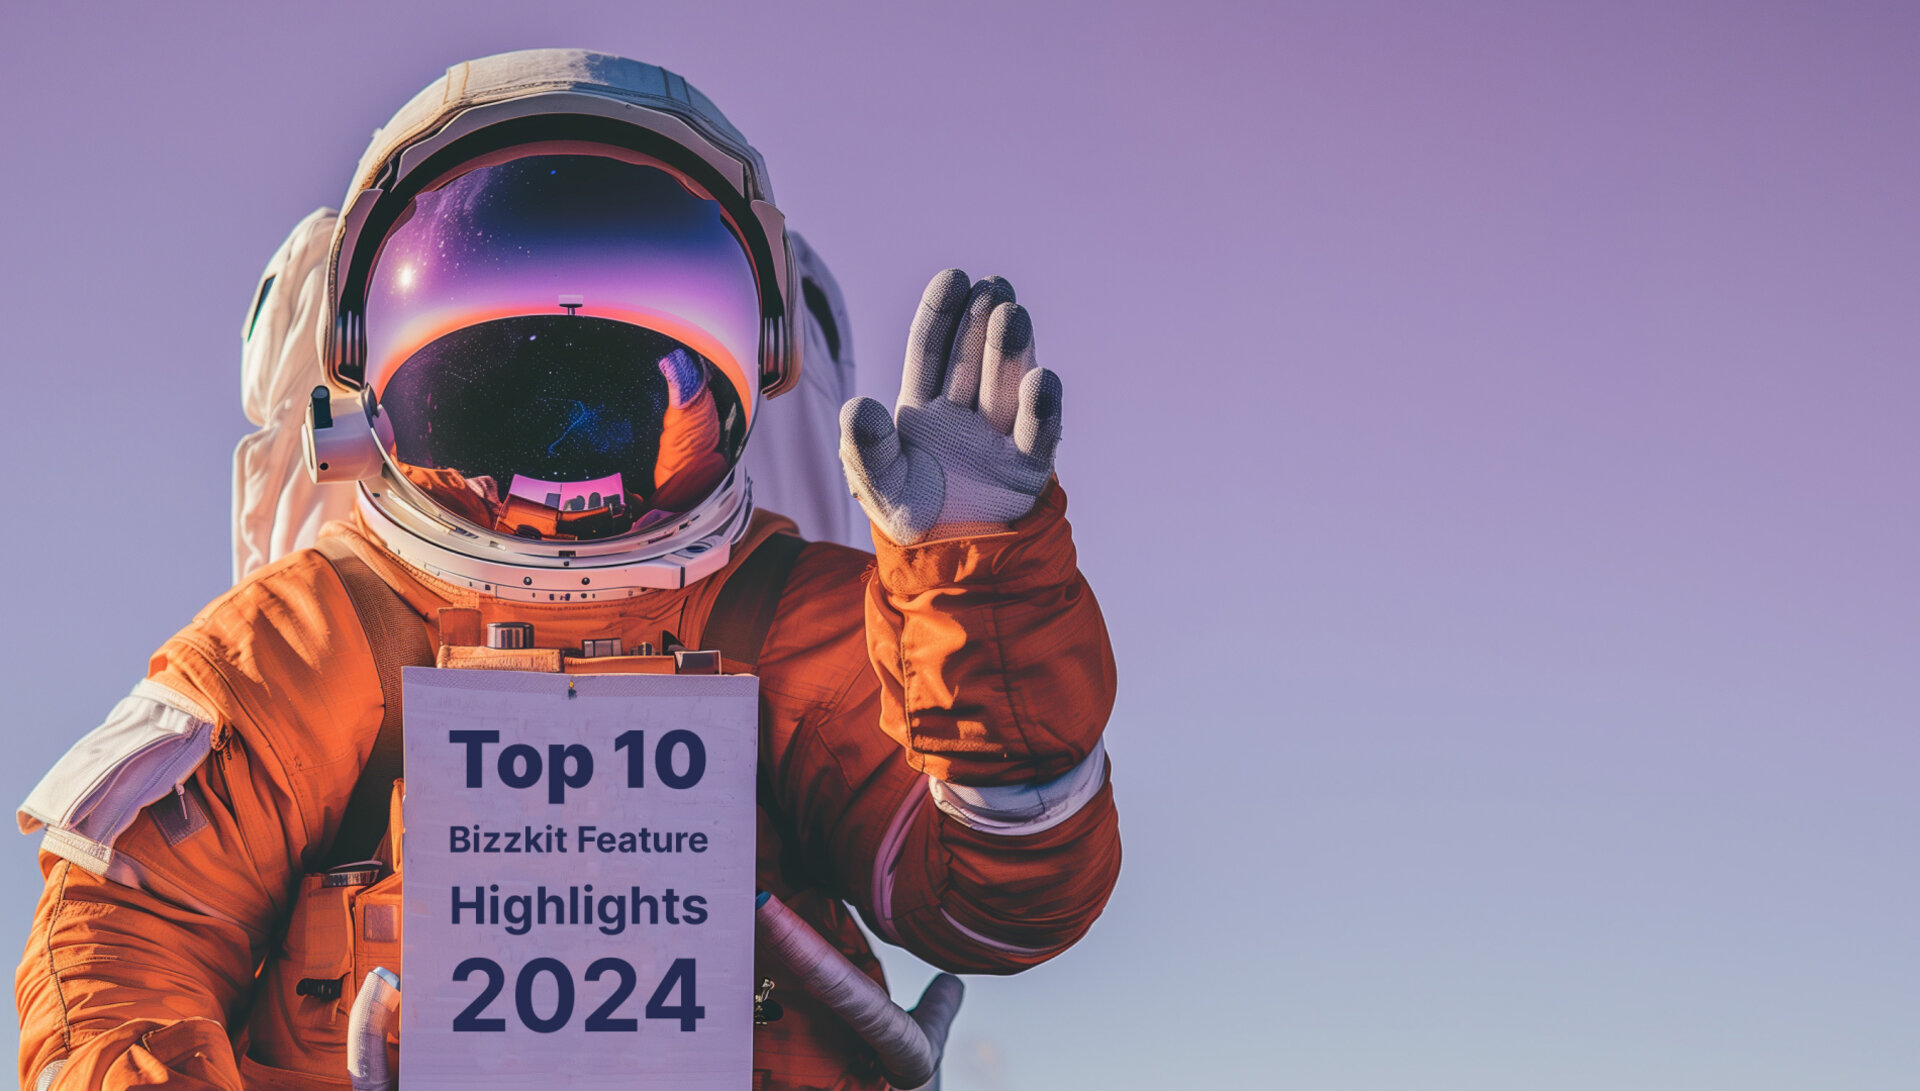 Top 10 Bizzkit Feature Highlights 2024